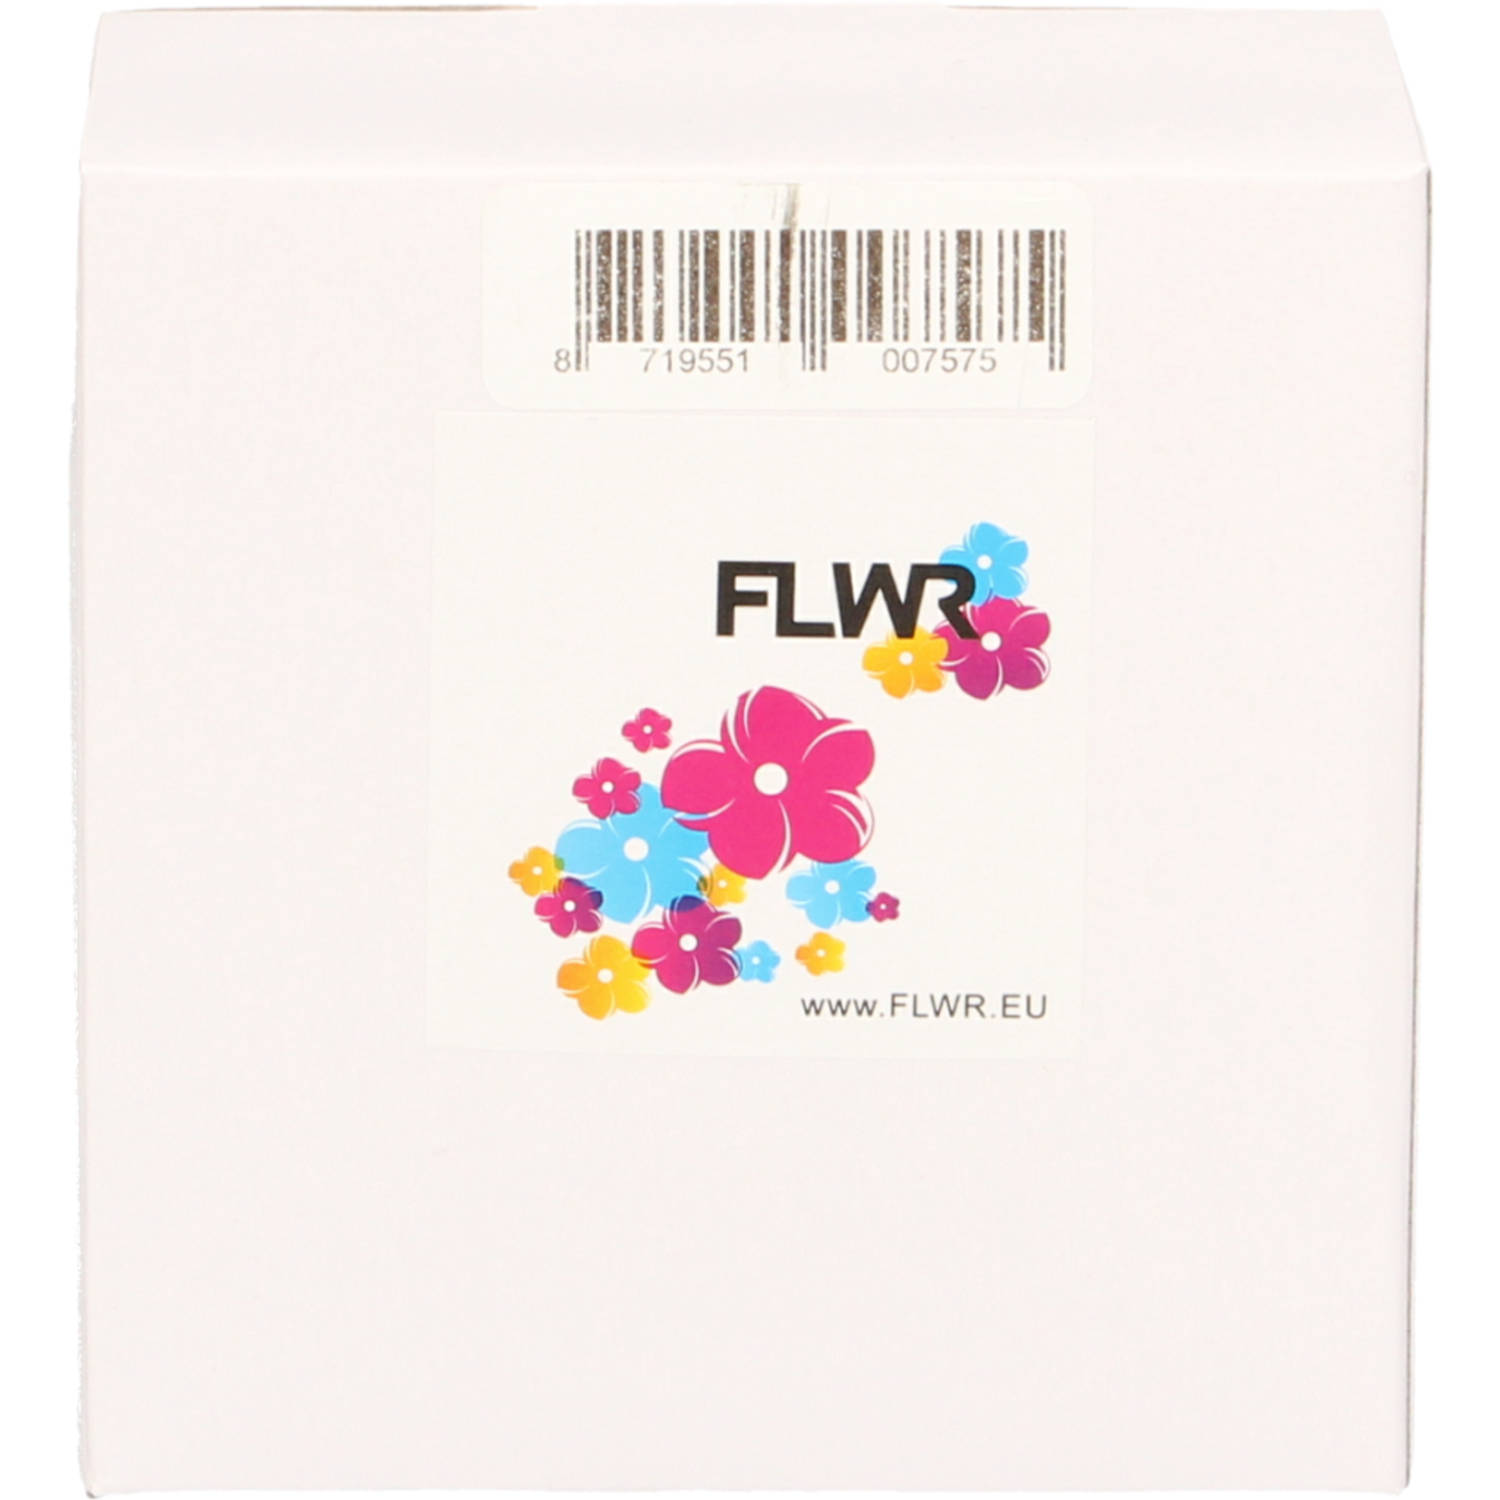 FLWR Brother DK-11208 38 mm x 90 mm wit labels